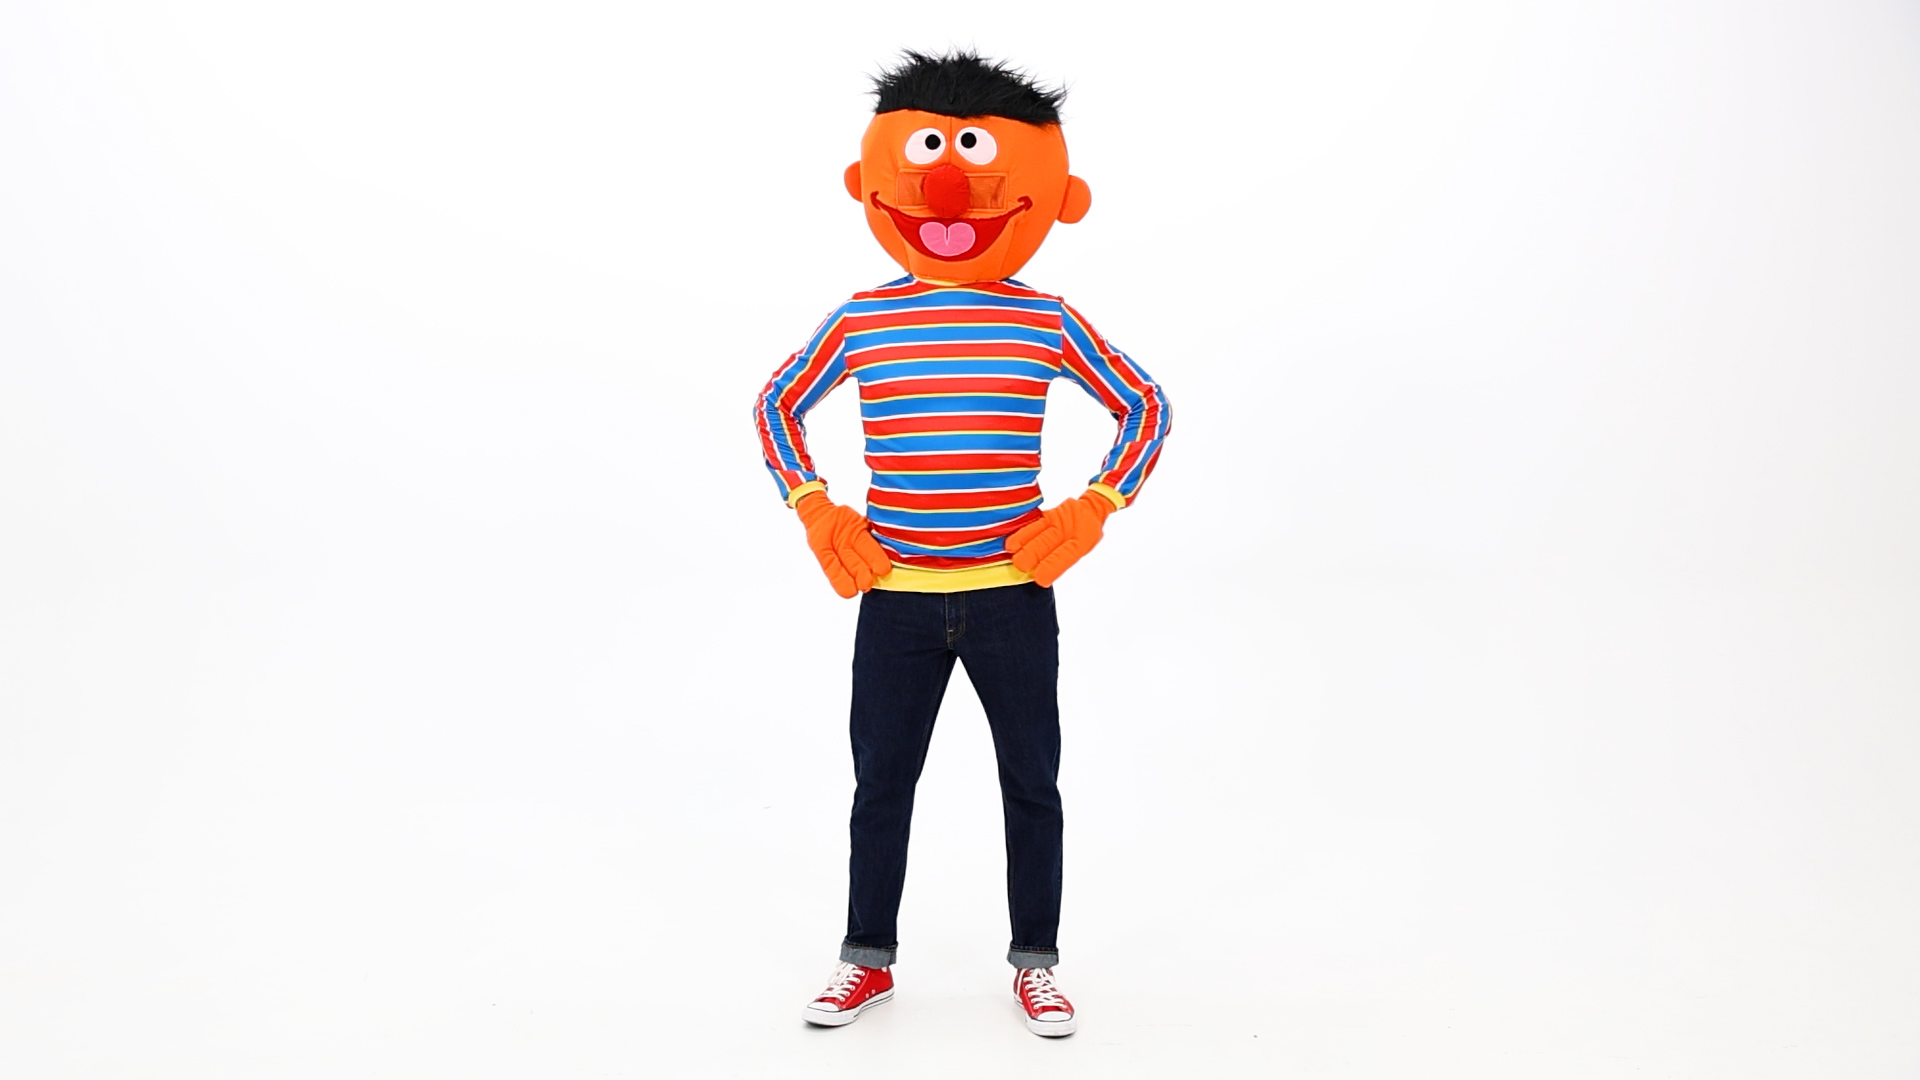 FUN2560AD Sesame Street Ernie Mascot Costume for Men